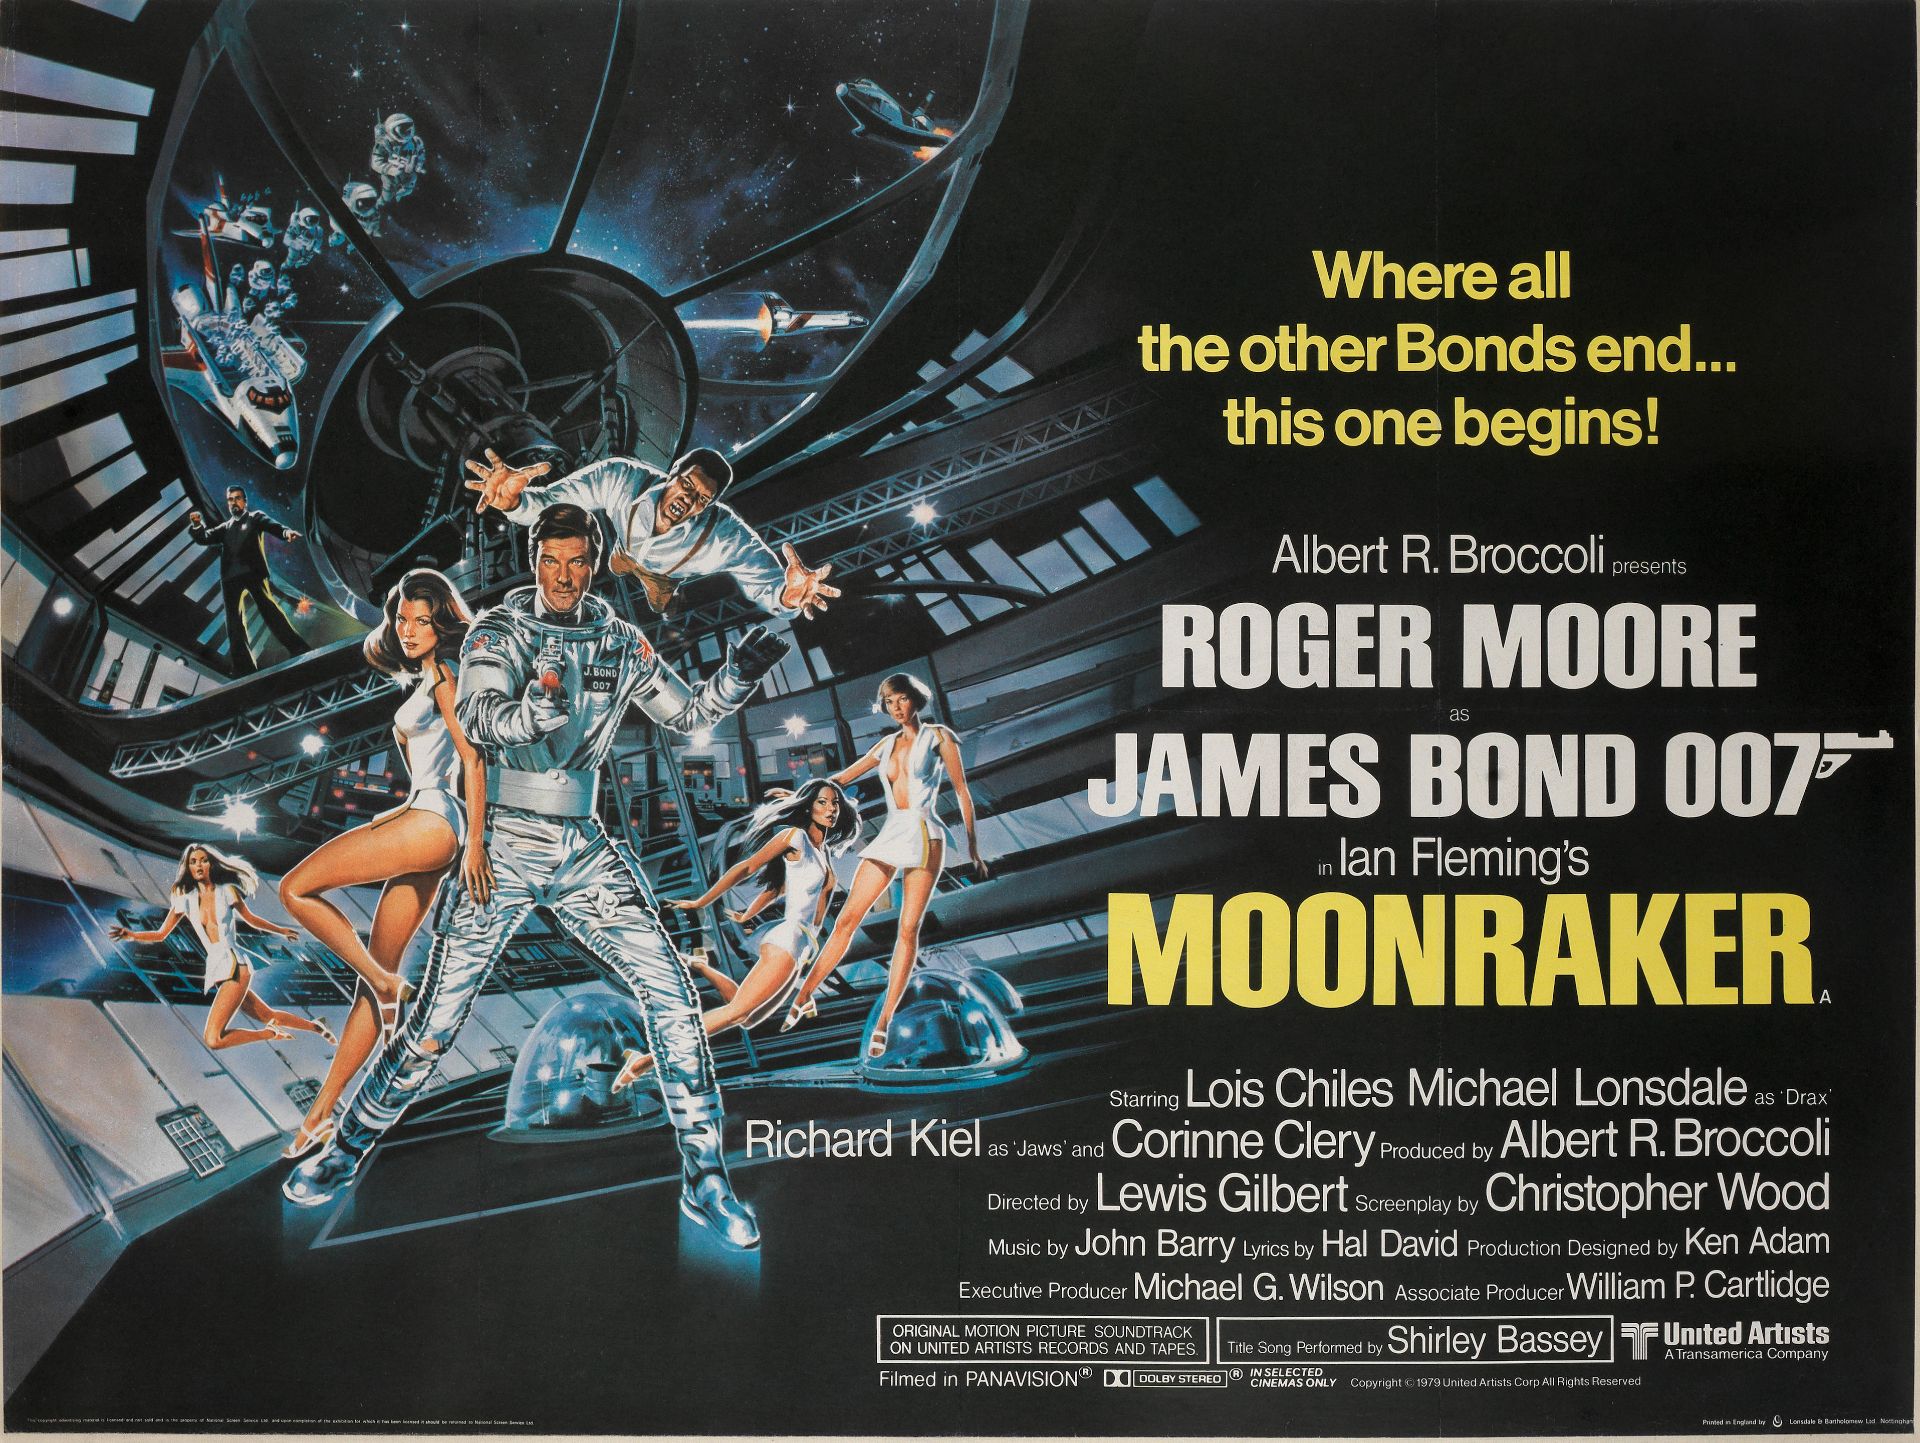 Moonraker Eon Productions/United Artists, 1979,